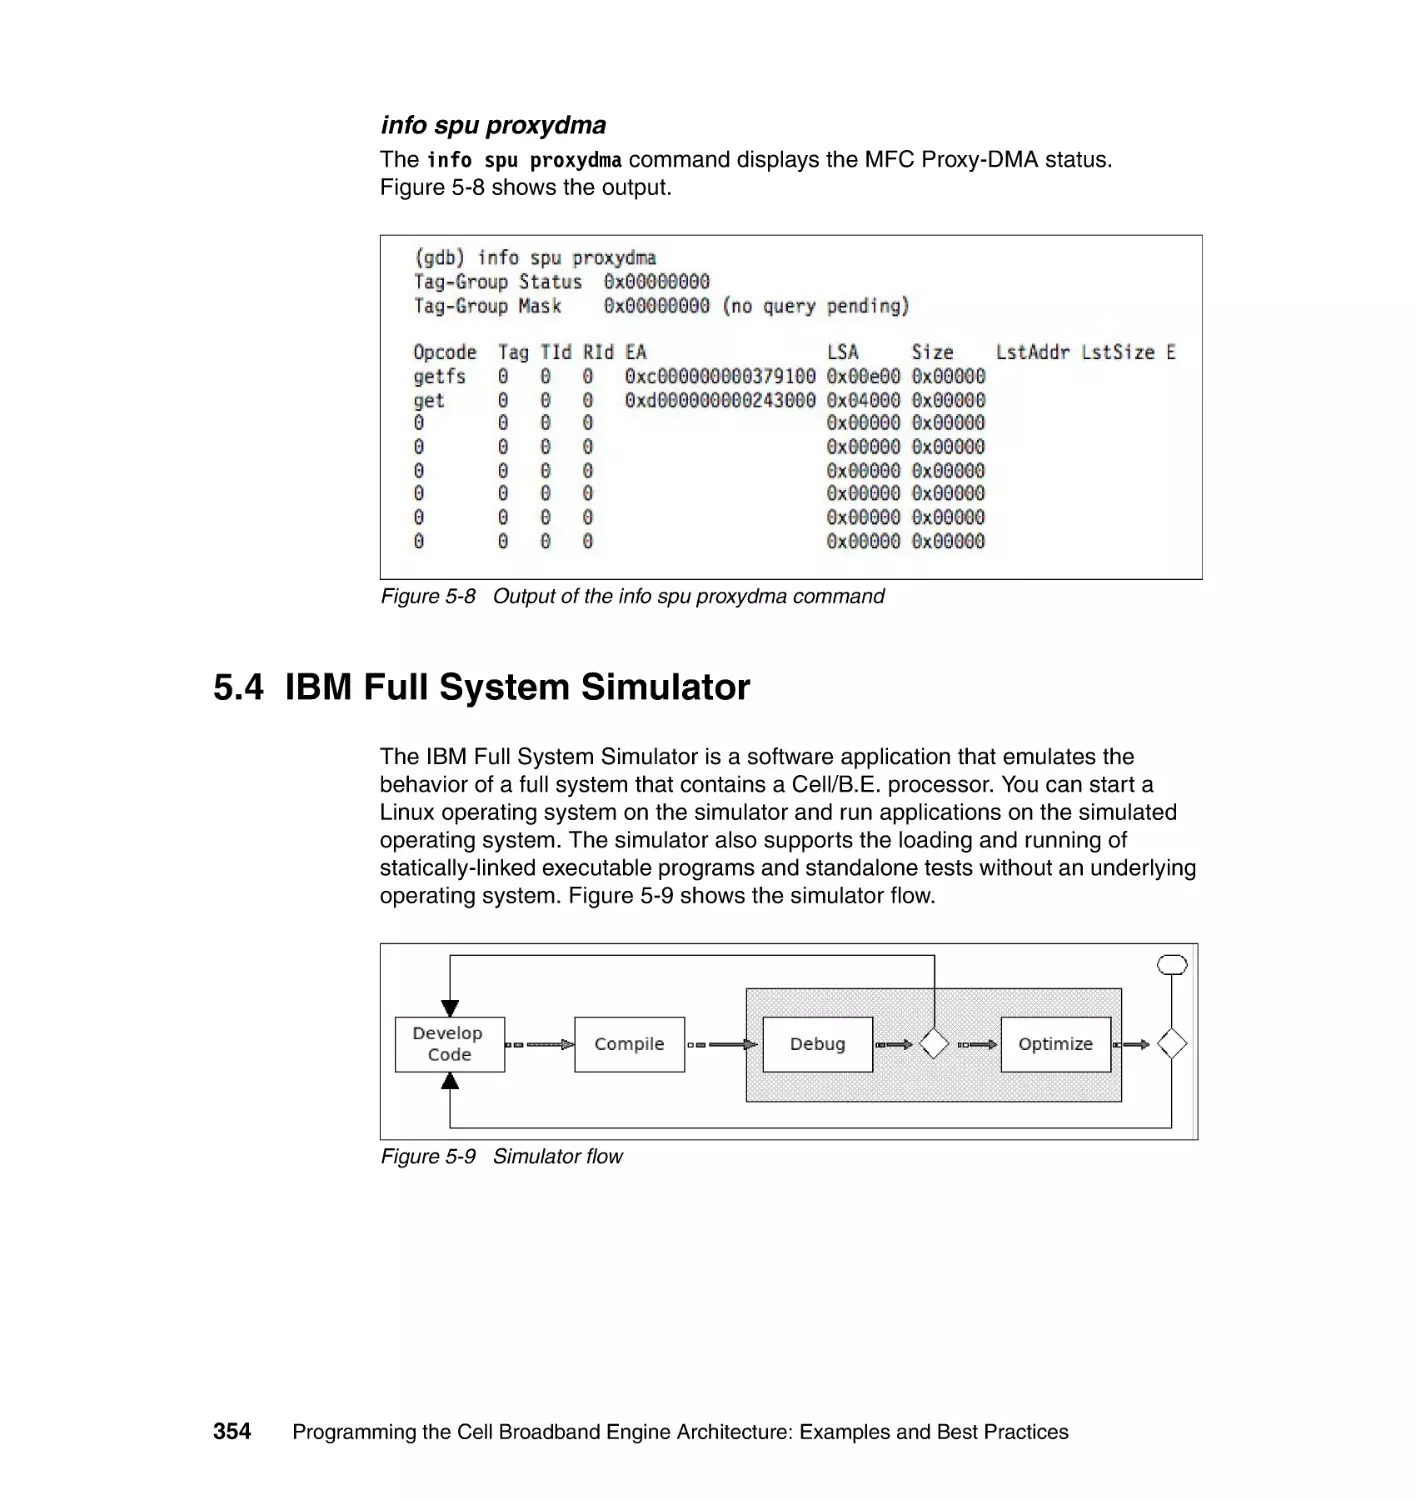 5.4 IBM Full System Simulator